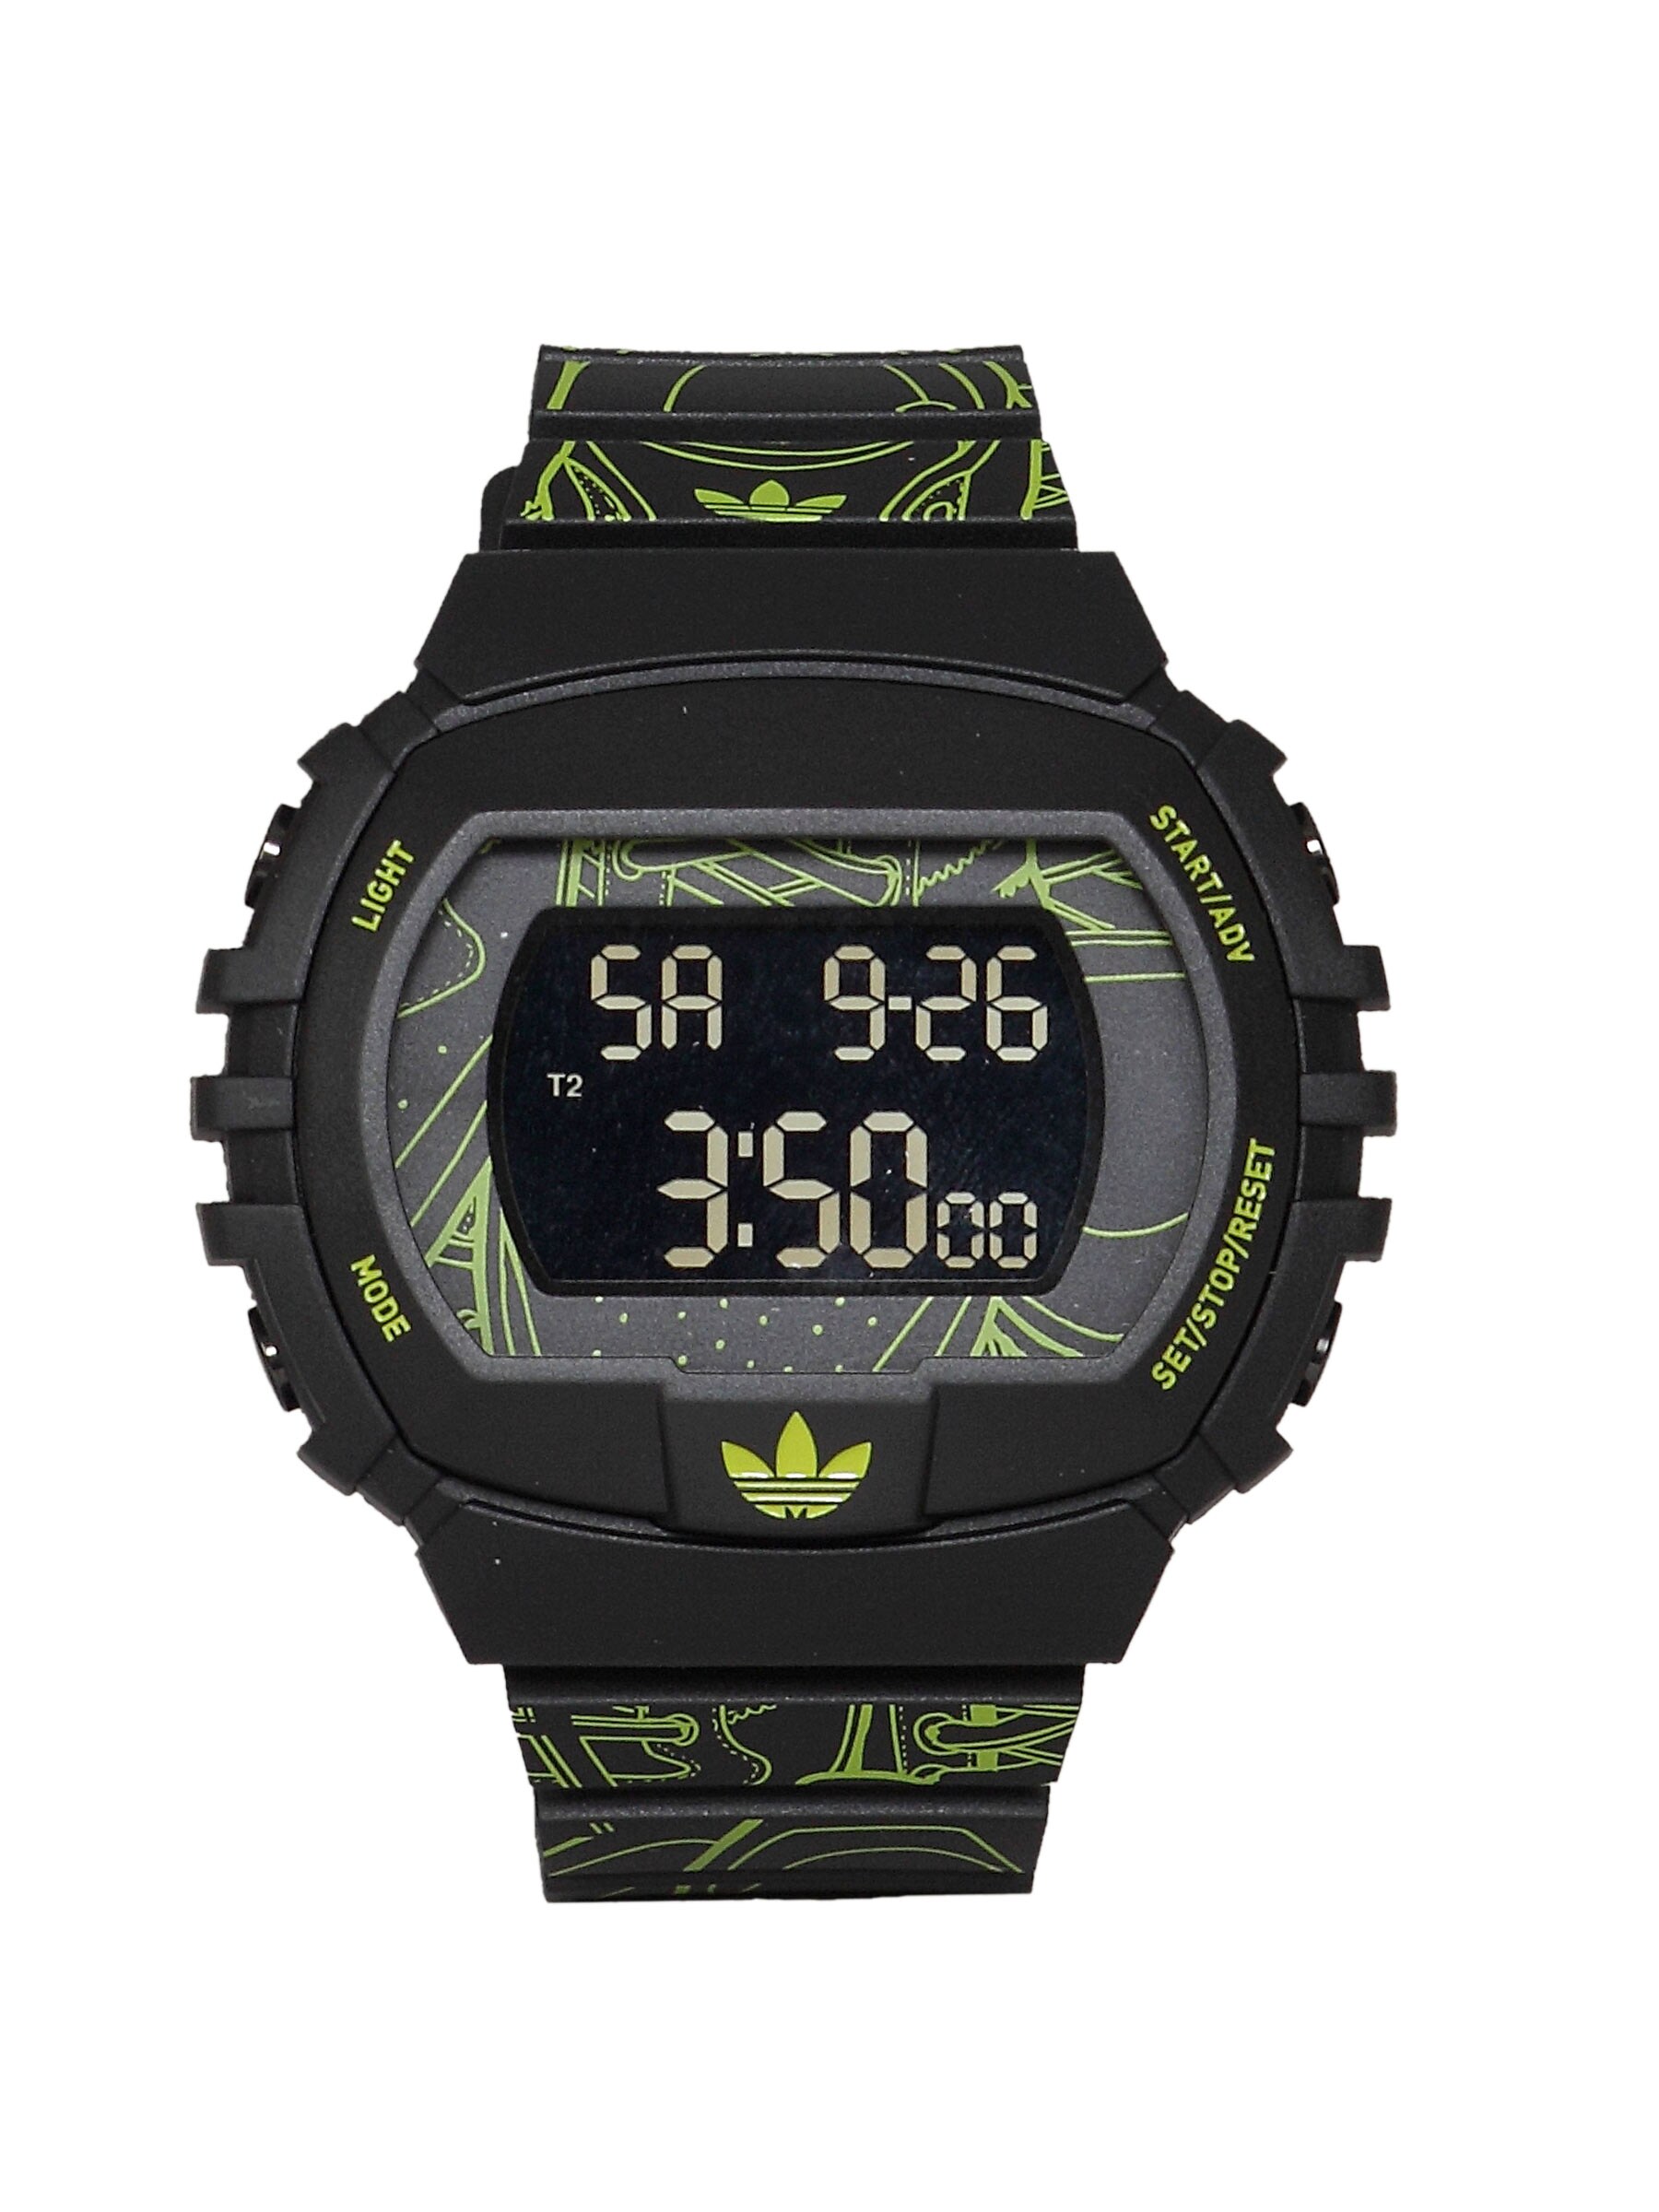 ADIDAS Unisex Chronographic Digital Black Watch